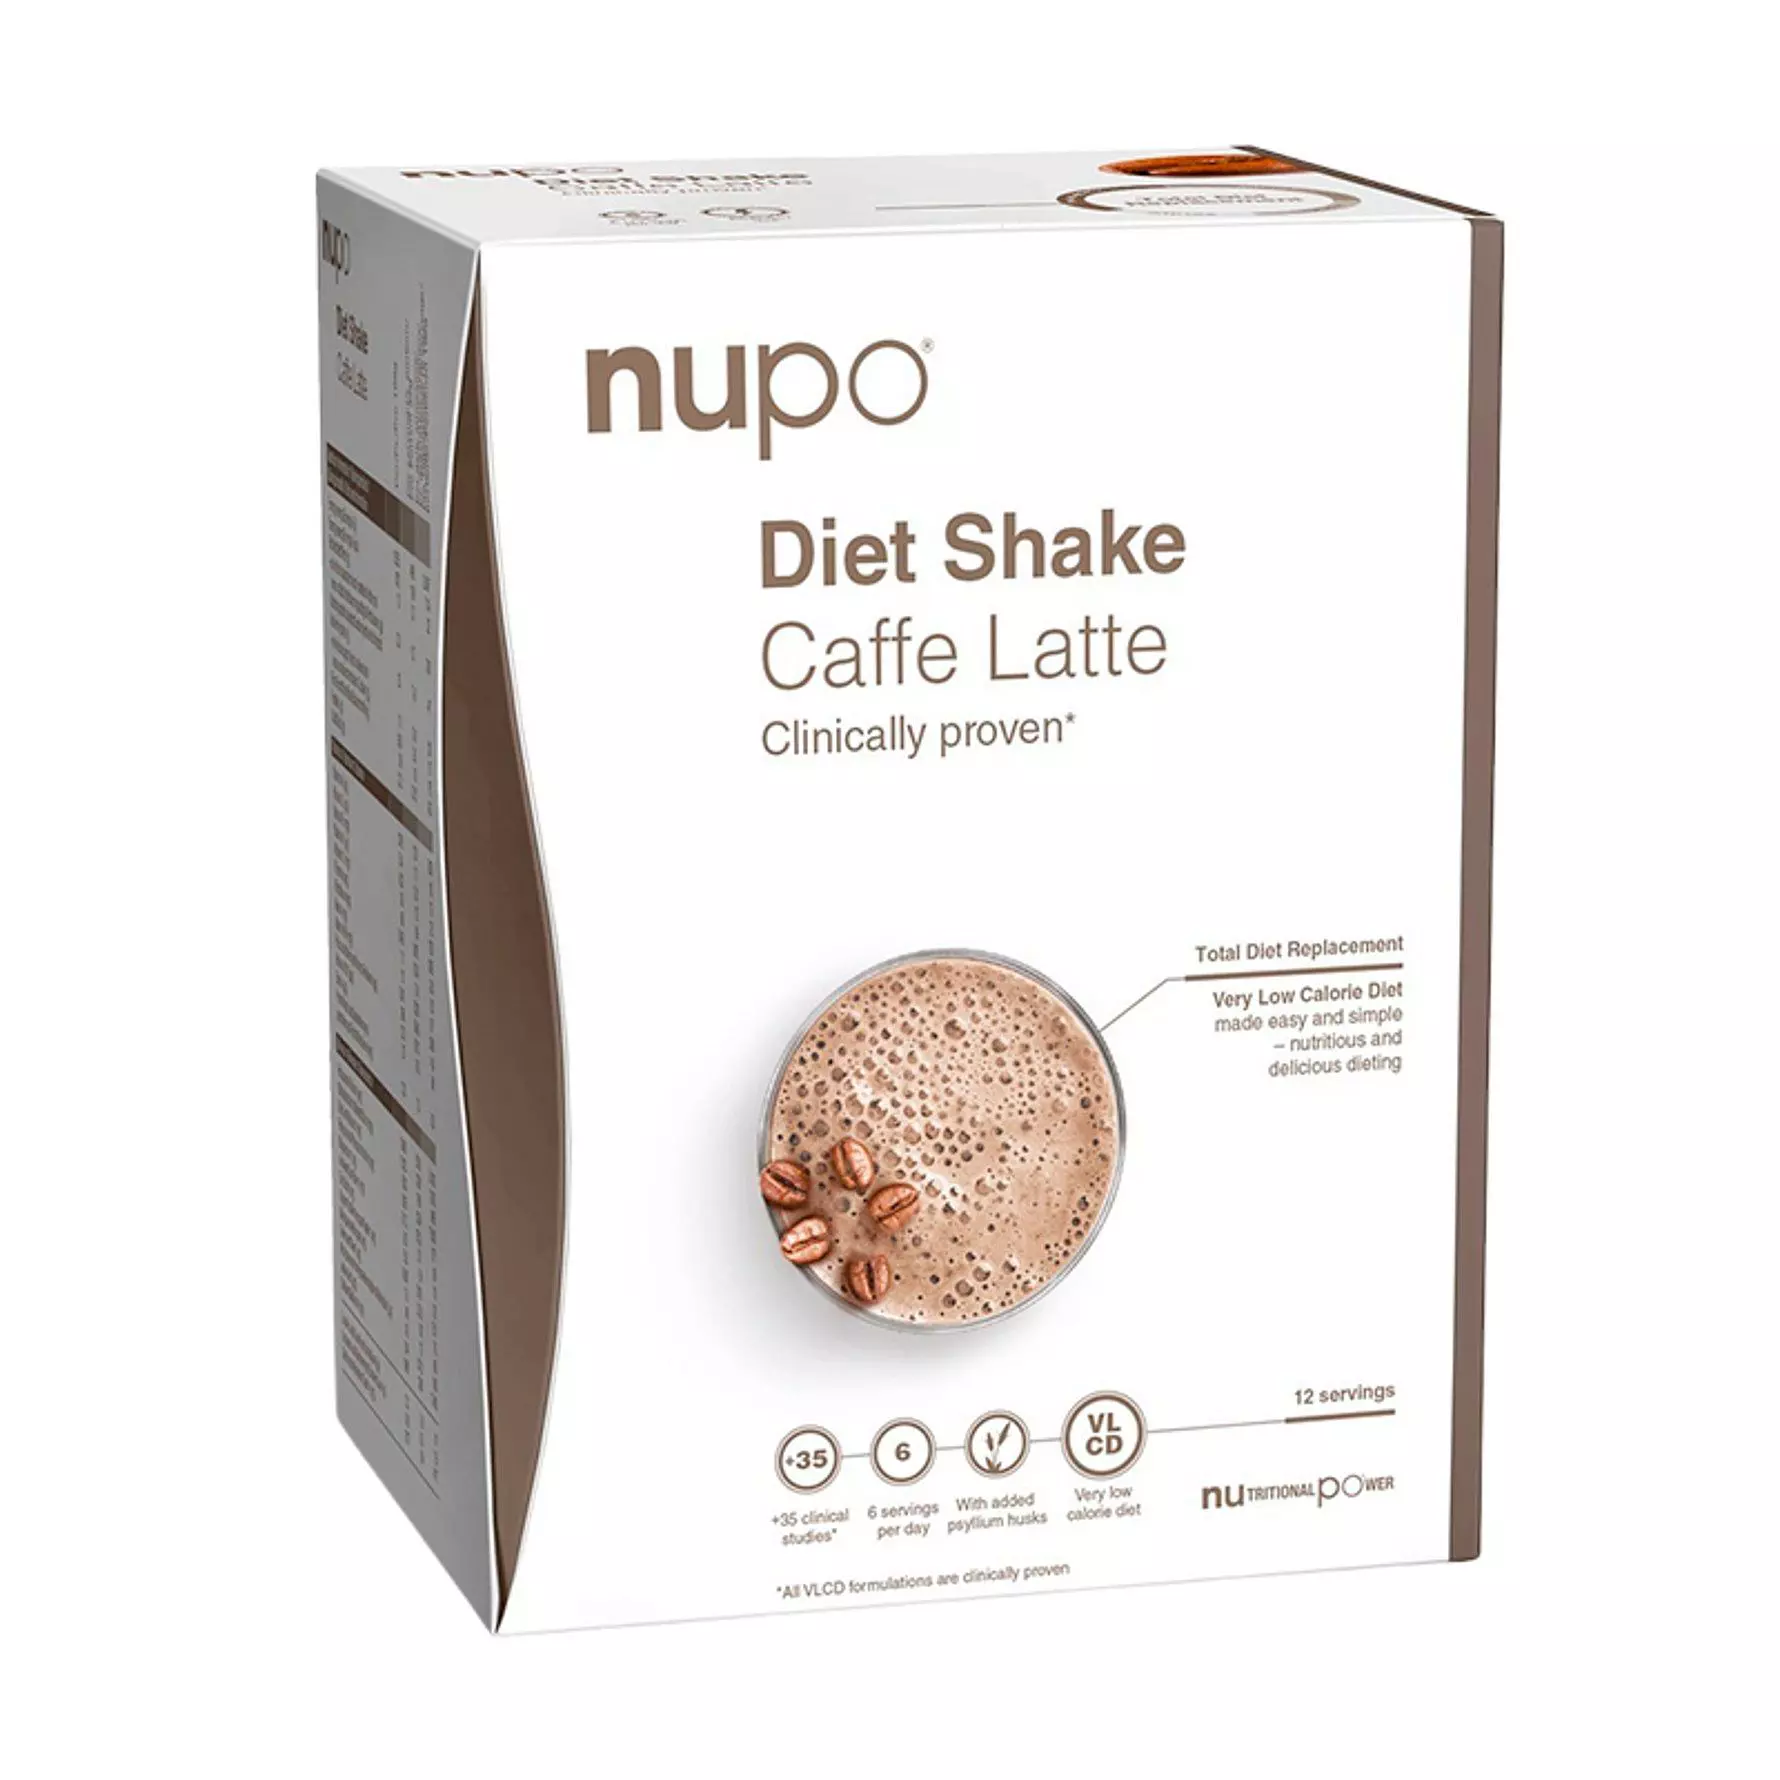 Nupo Diet Shake Caffe Latte Servings